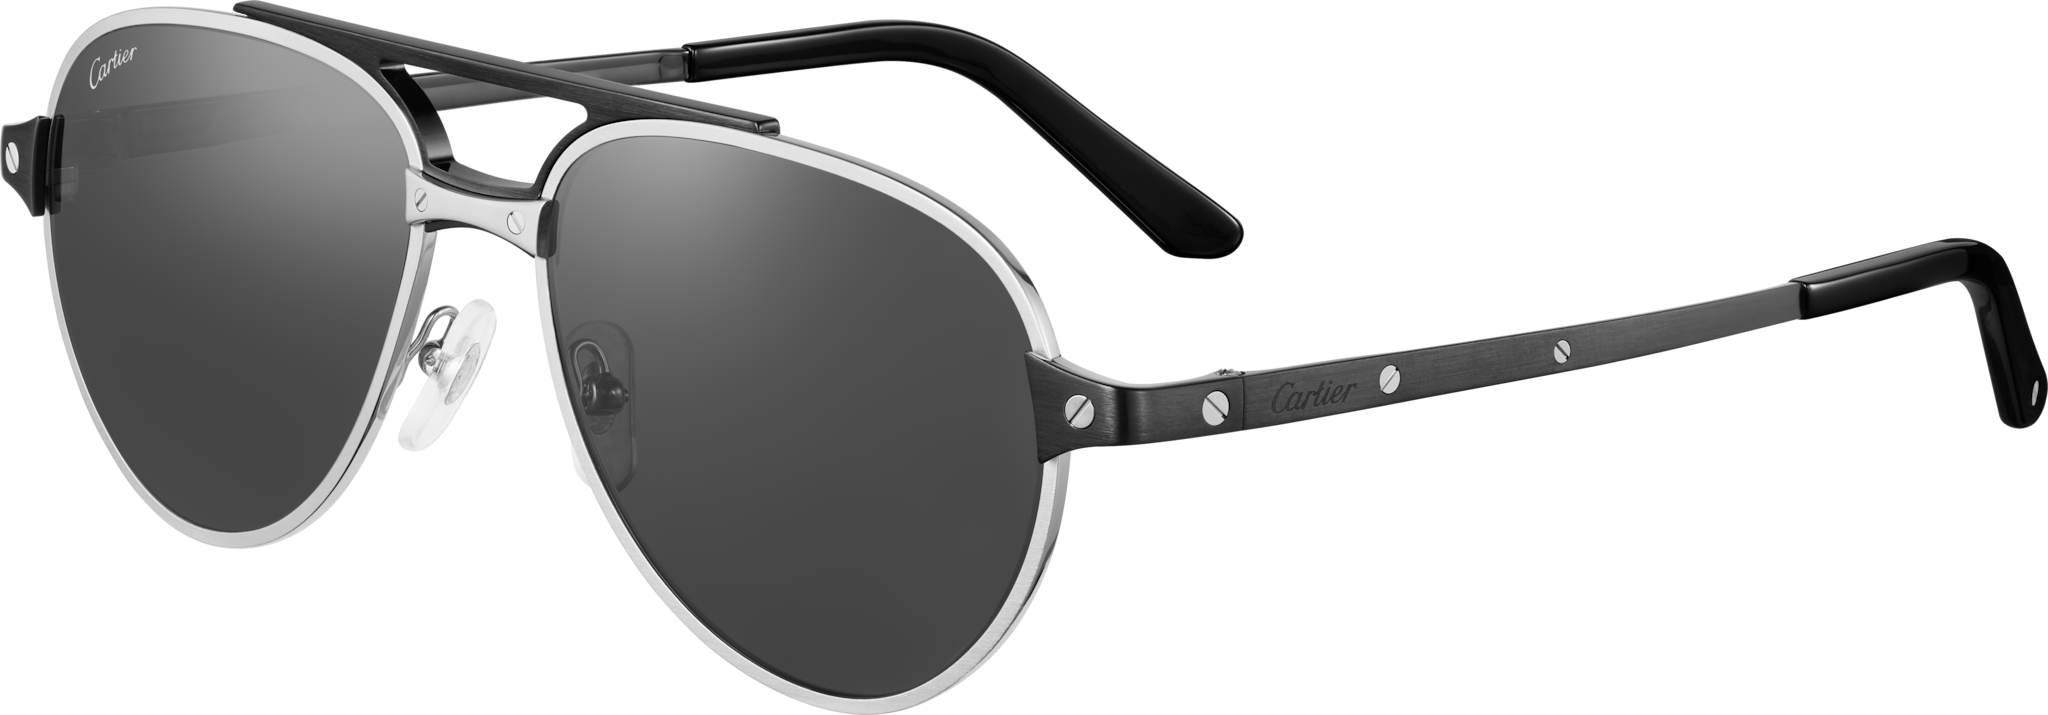 Gafas de sol Santos de CartierMetal acabado platino cepillado, lentes negras